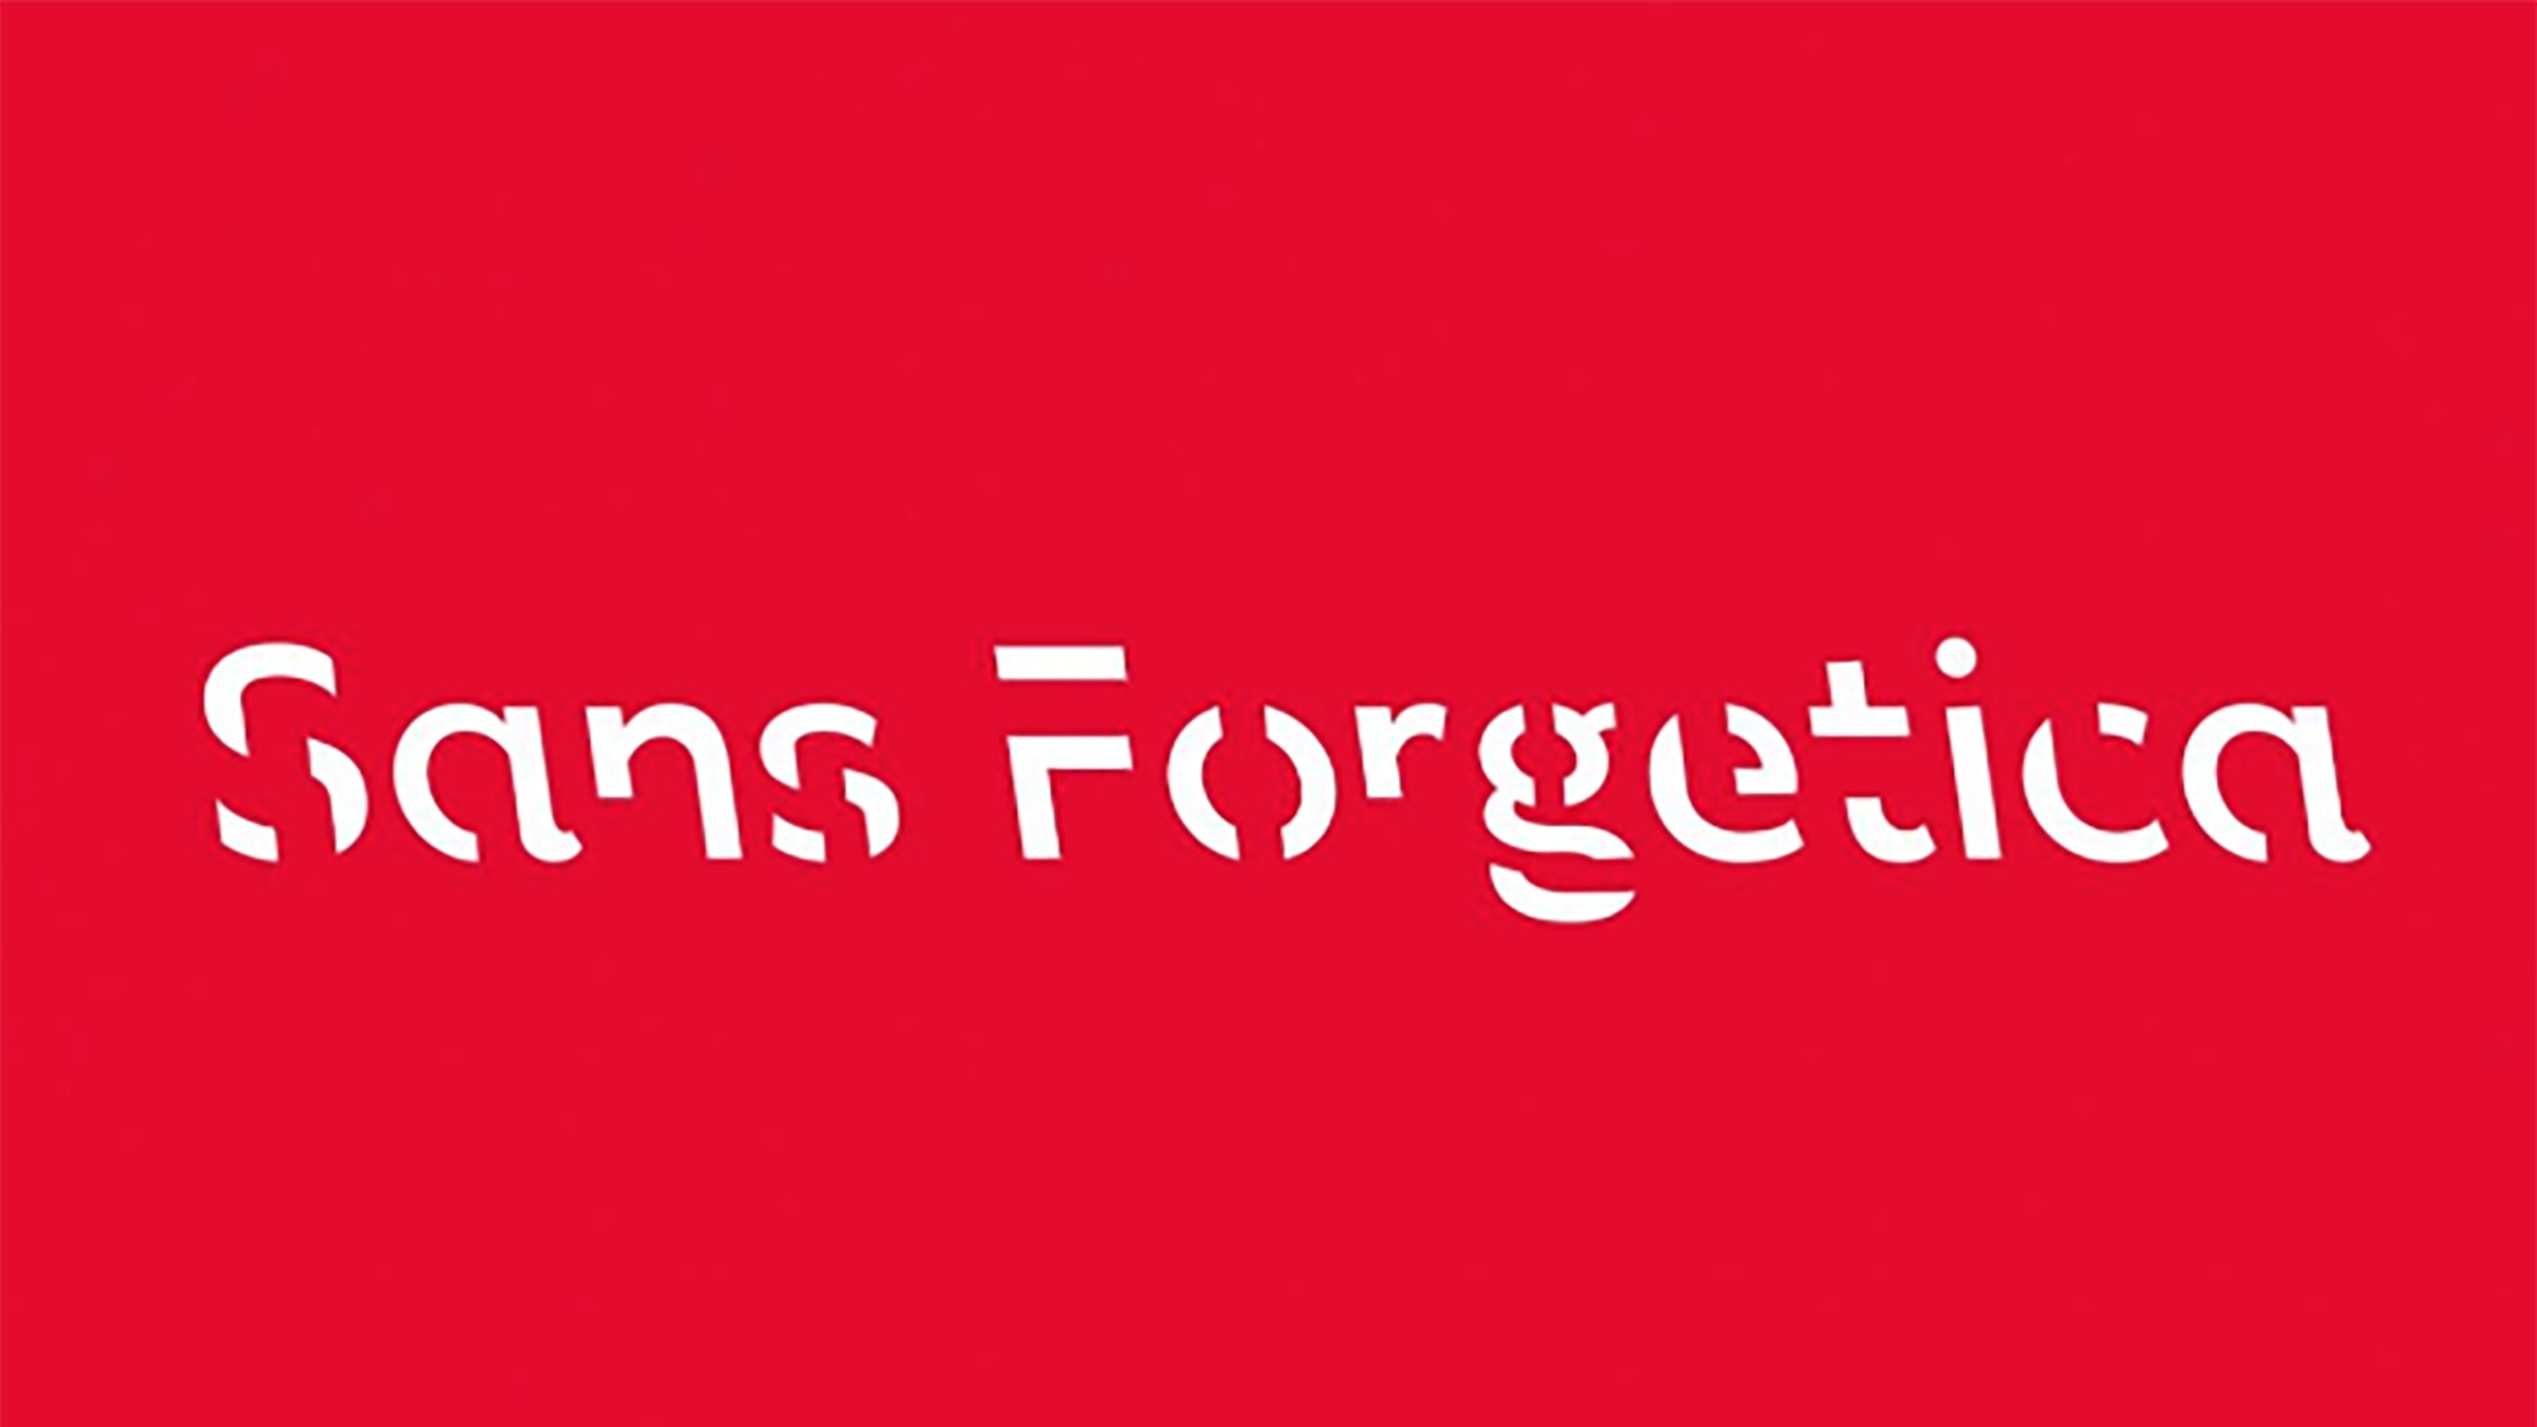 Sans Forgetica是澳大利亚RMIT大学创建的一种新字体，用于帮助记忆保留。